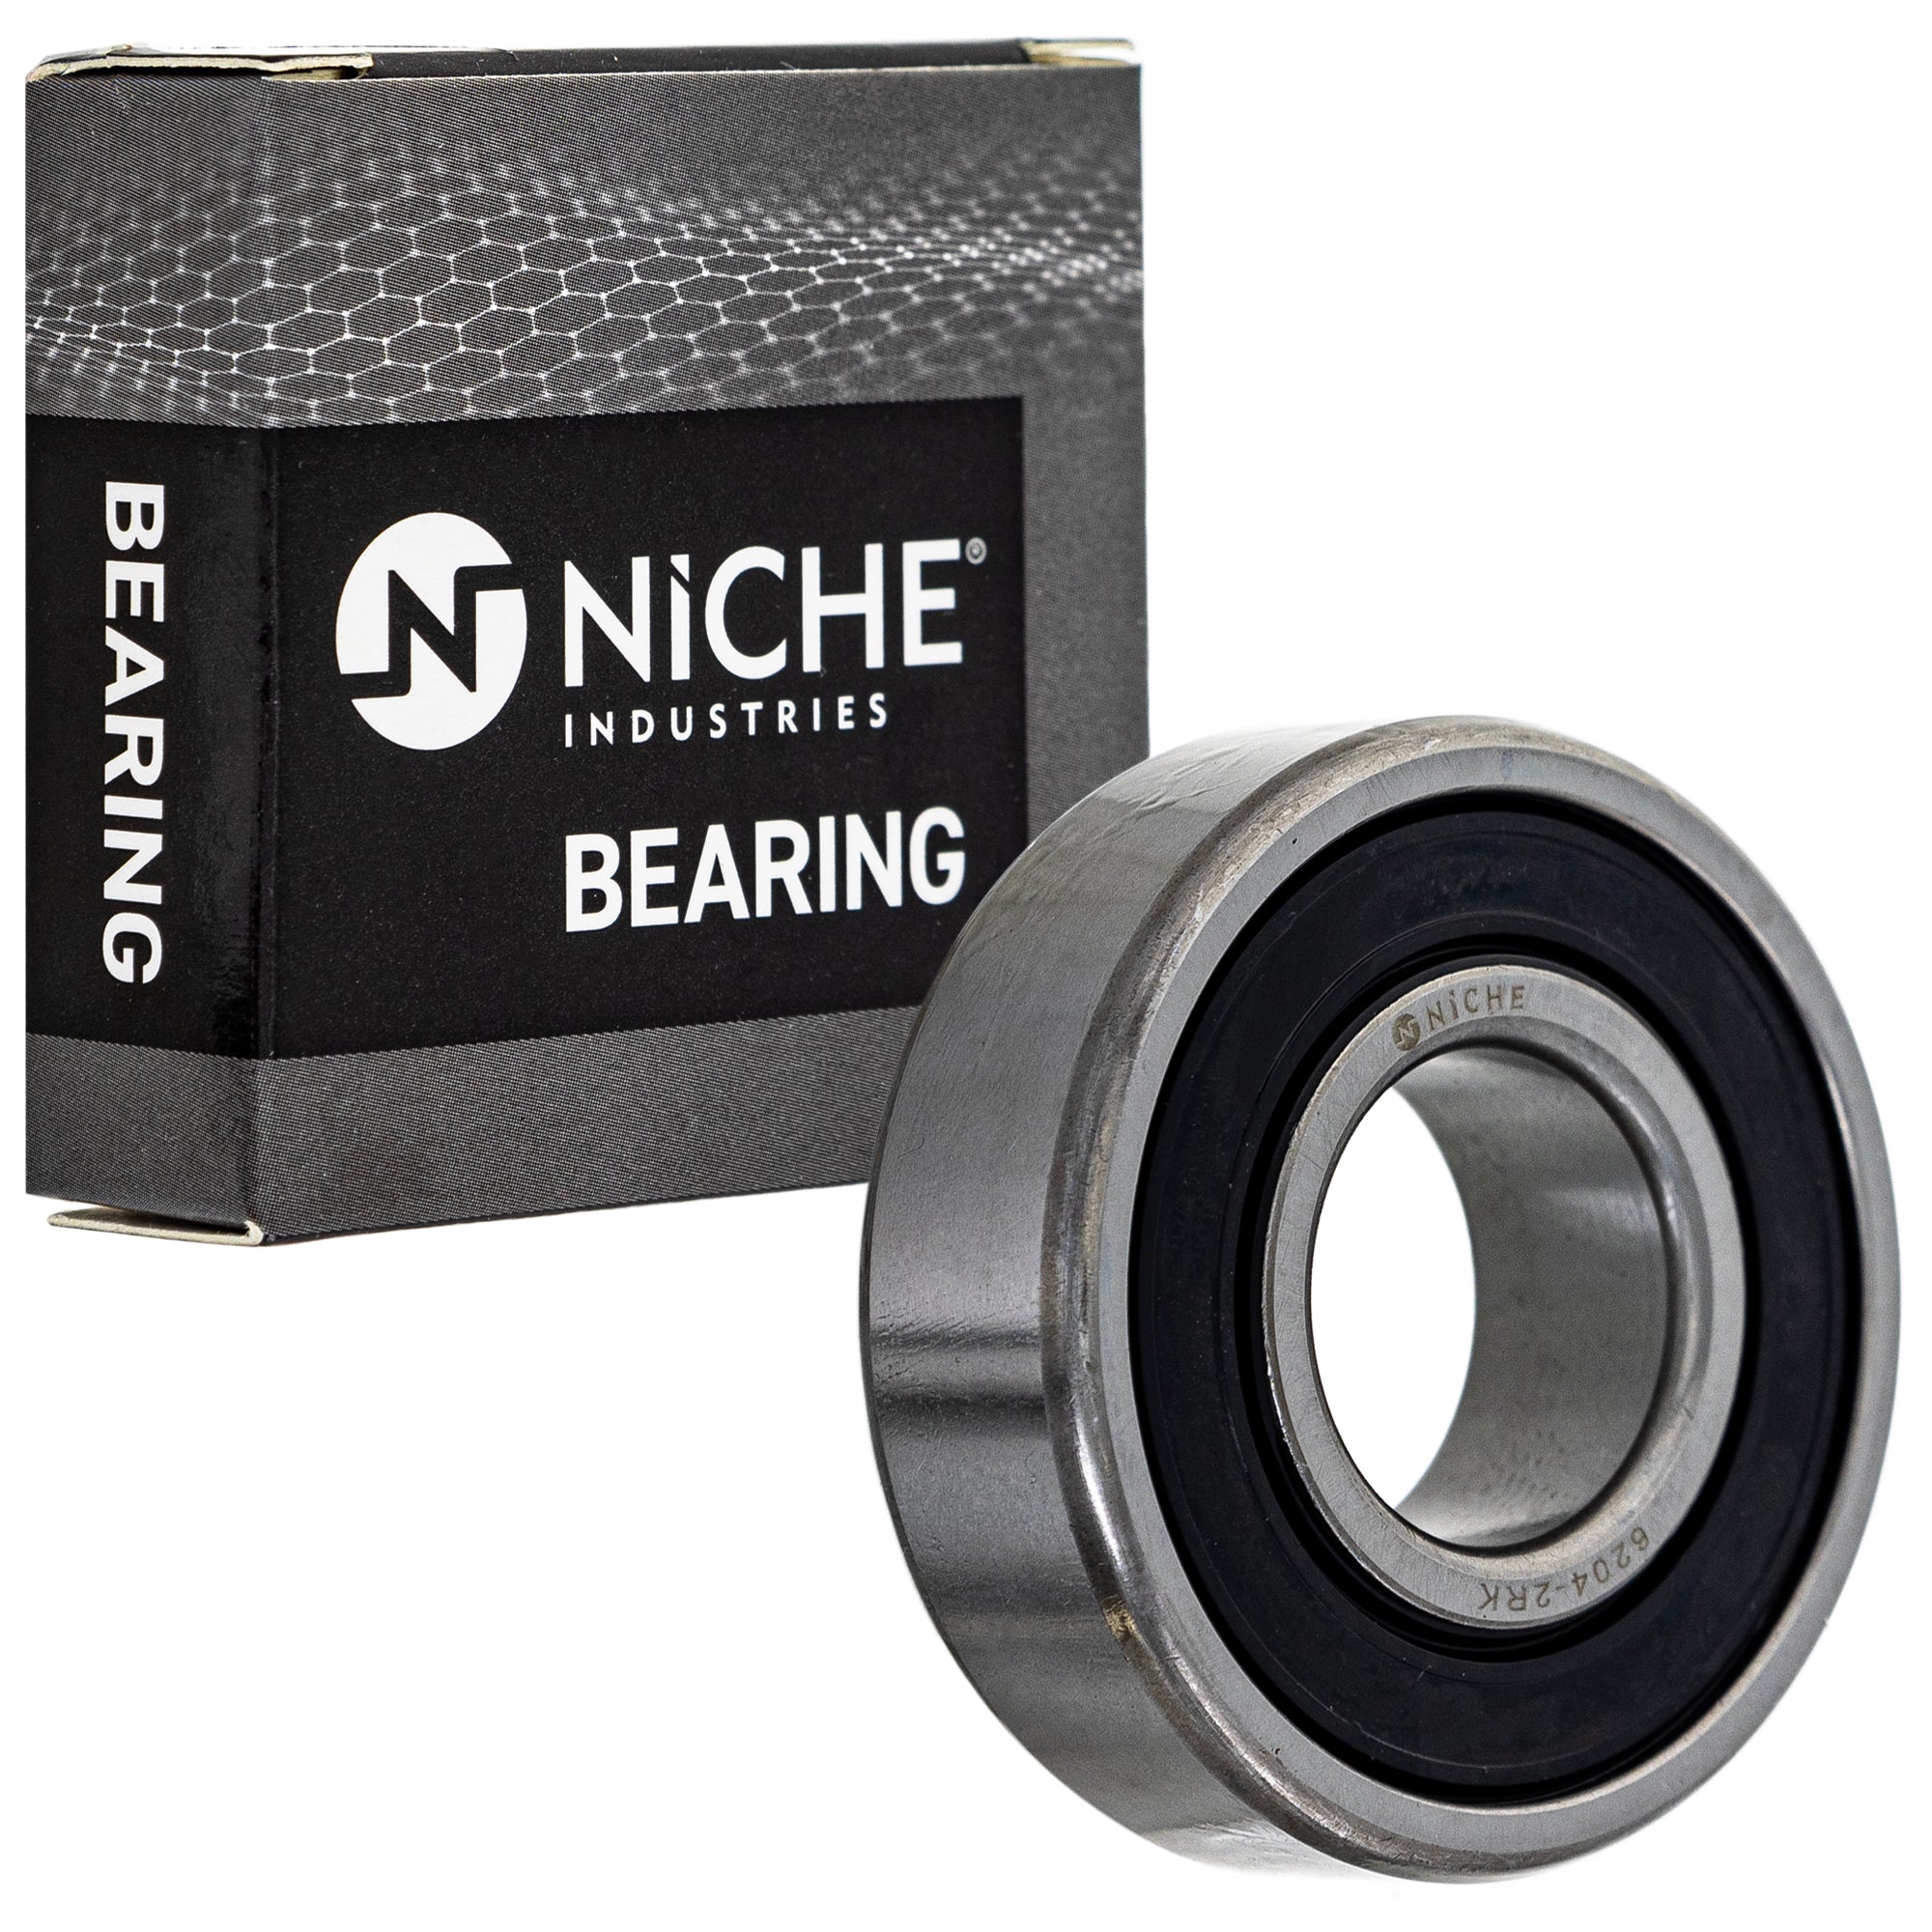 NICHE 519-CBB2281R Bearing for zOTHER VFR750R TRX200 SV650S SV650